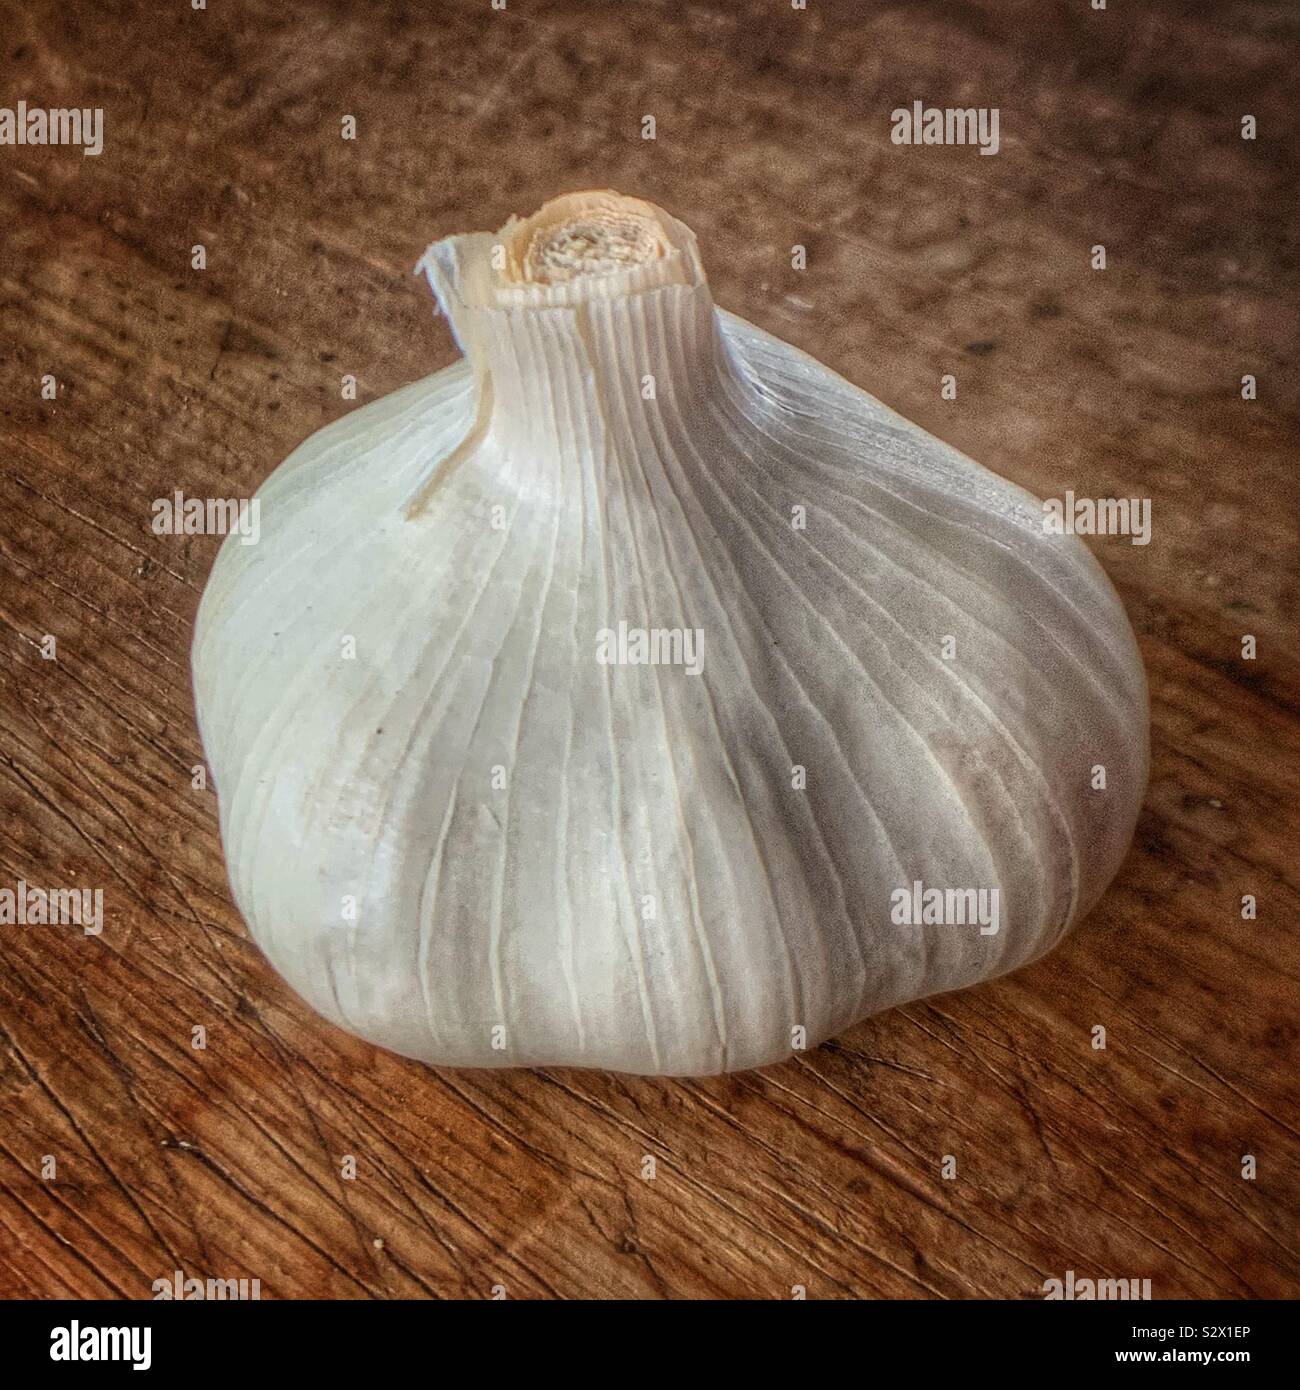 Bulb of garlic on table Stock Photo